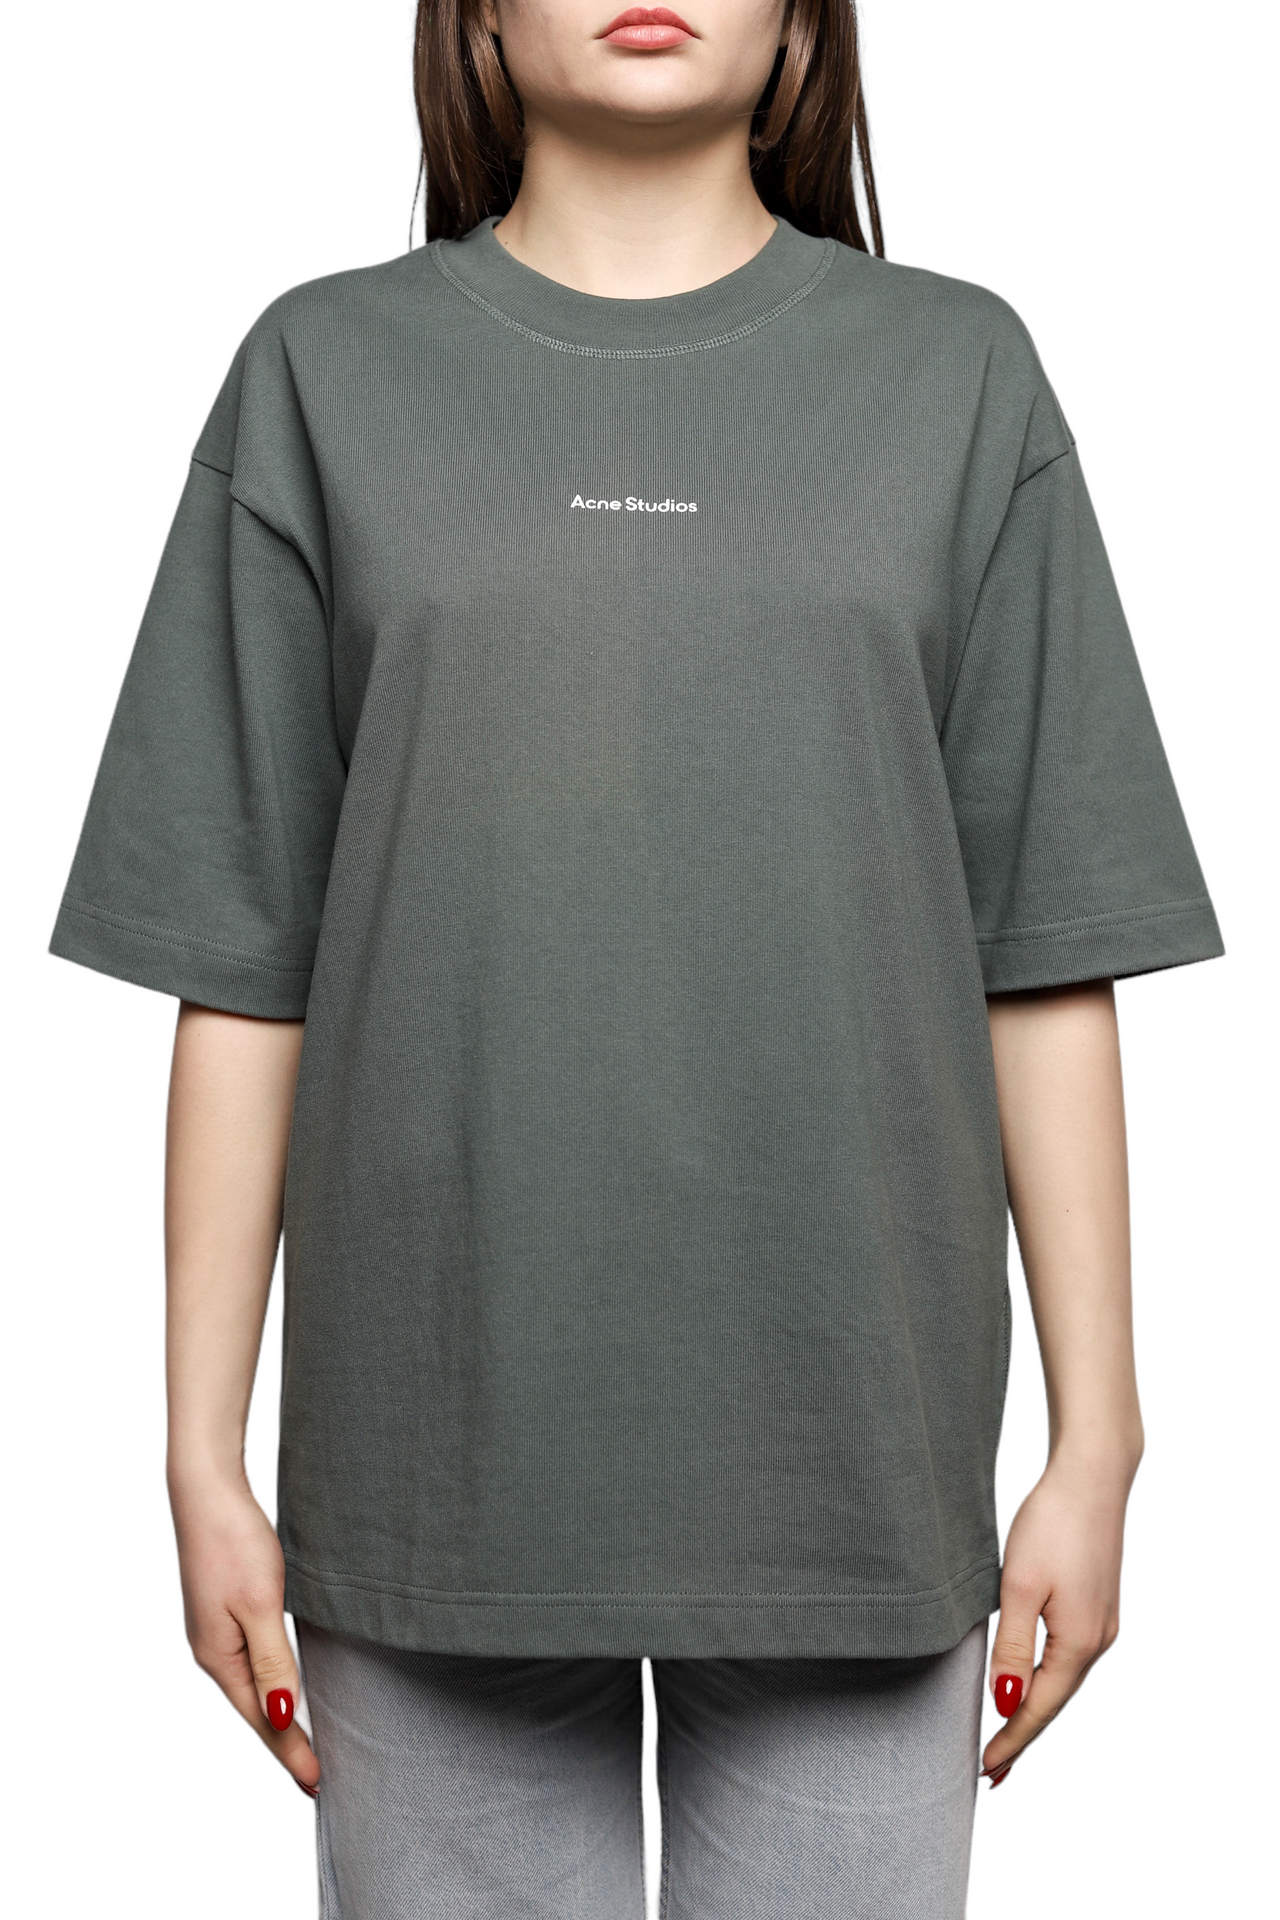 Acne Studios Logo cotton jersey T-shirt Khaki